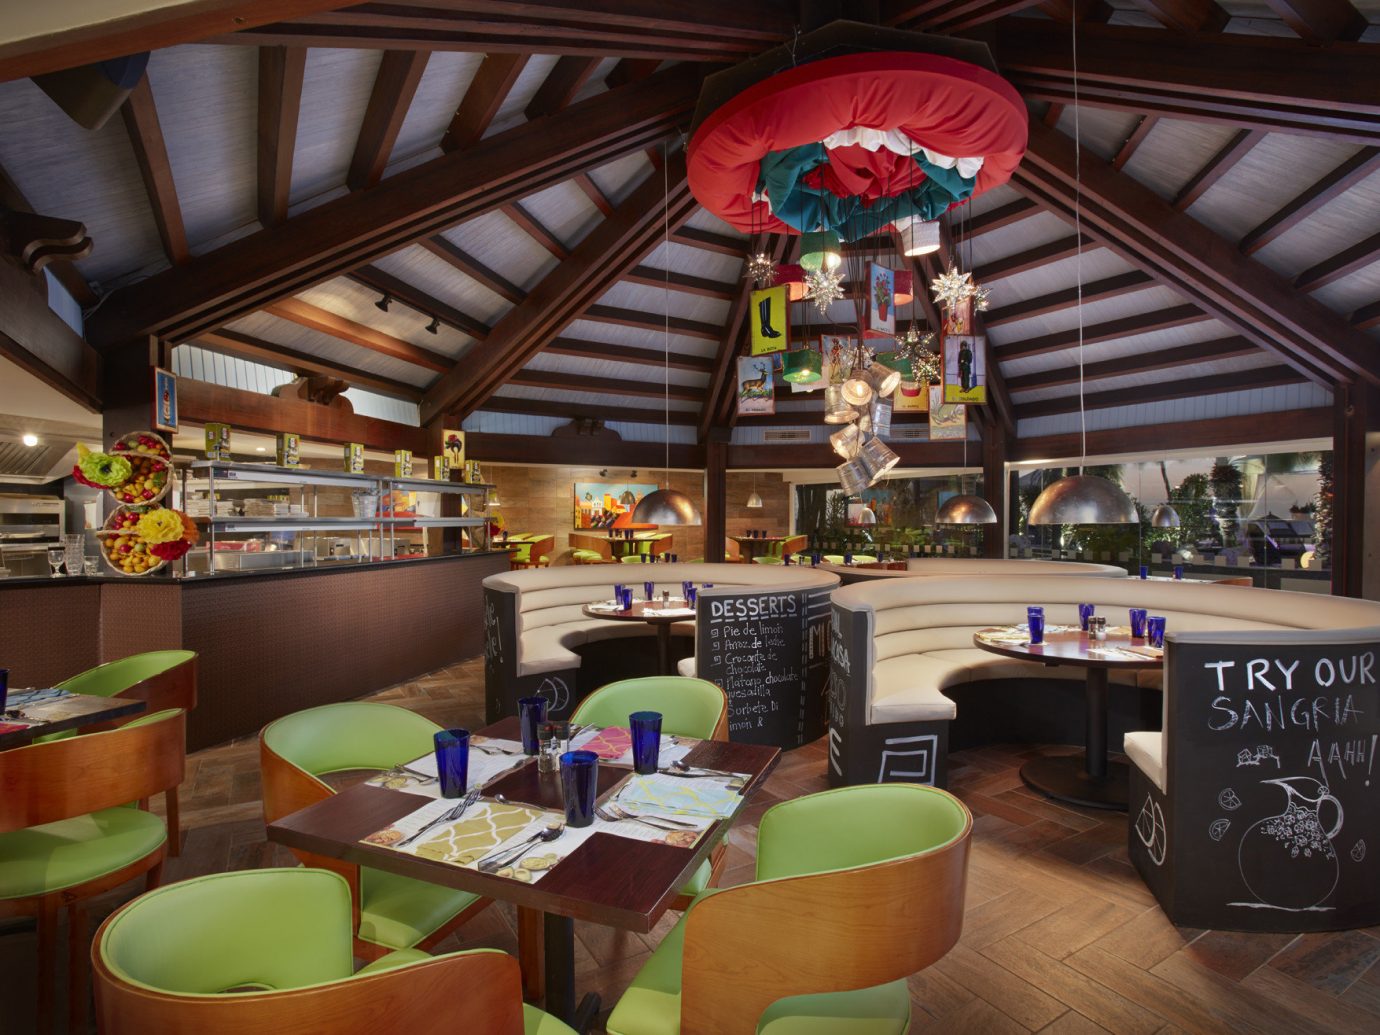 Hotels Romance indoor ceiling interior design restaurant meal